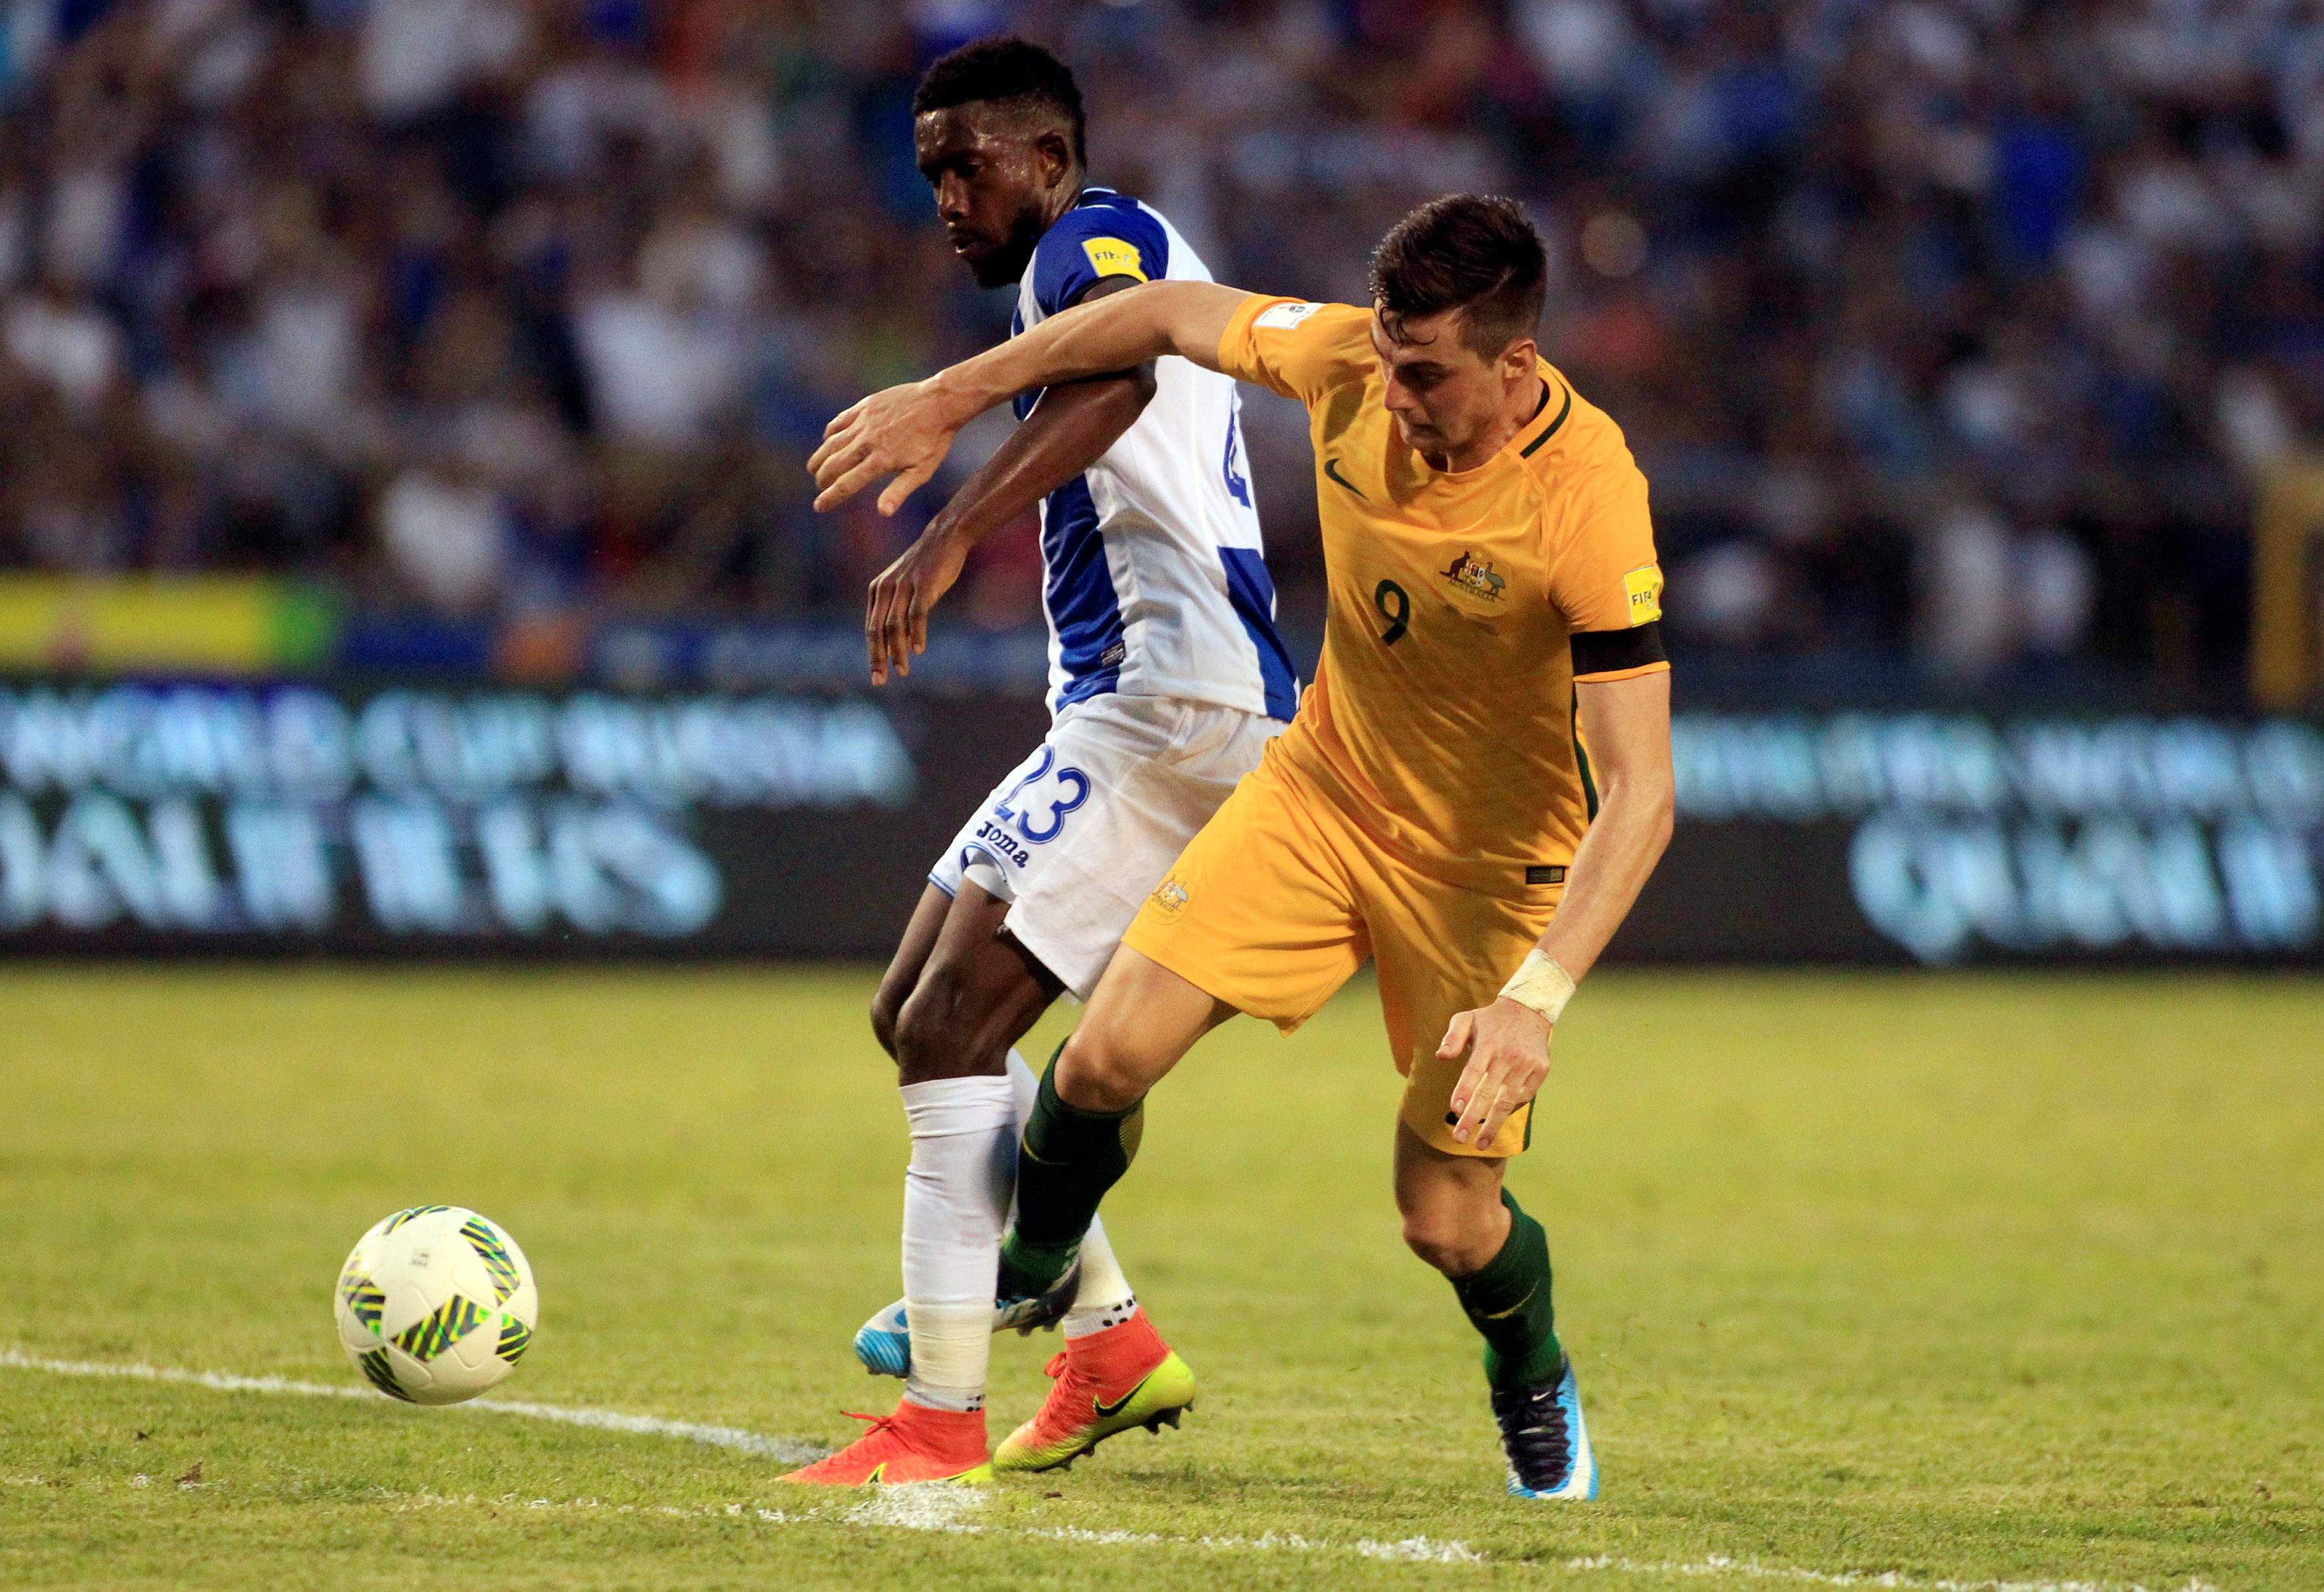 Football: Australia will take chances in second leg, says Juric